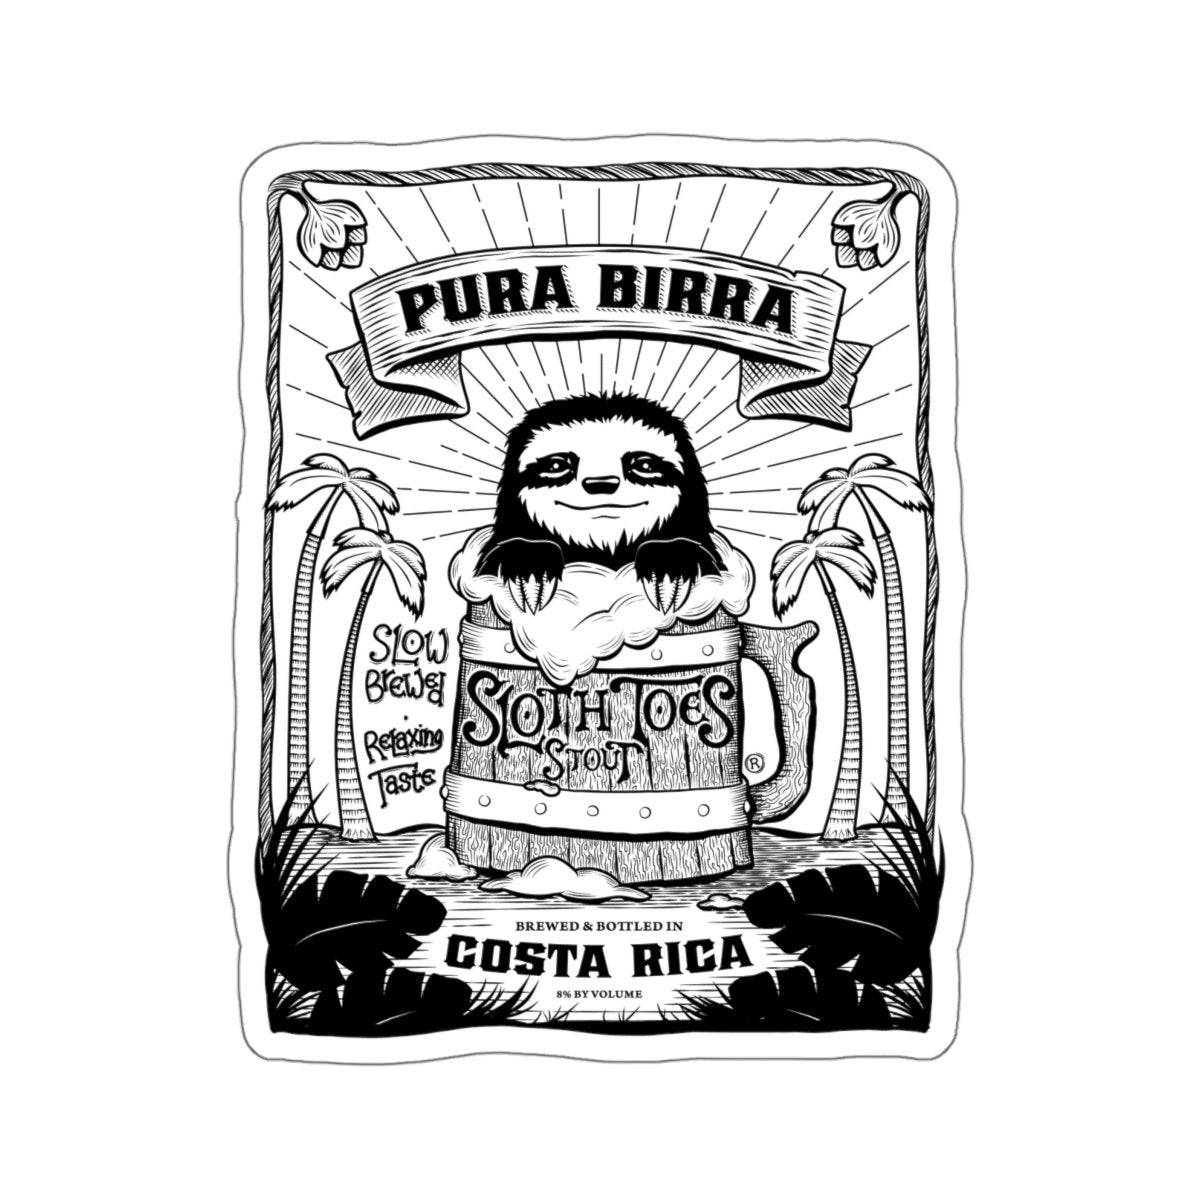 Pura Birra Die Cut Sticker - Slothtoescr